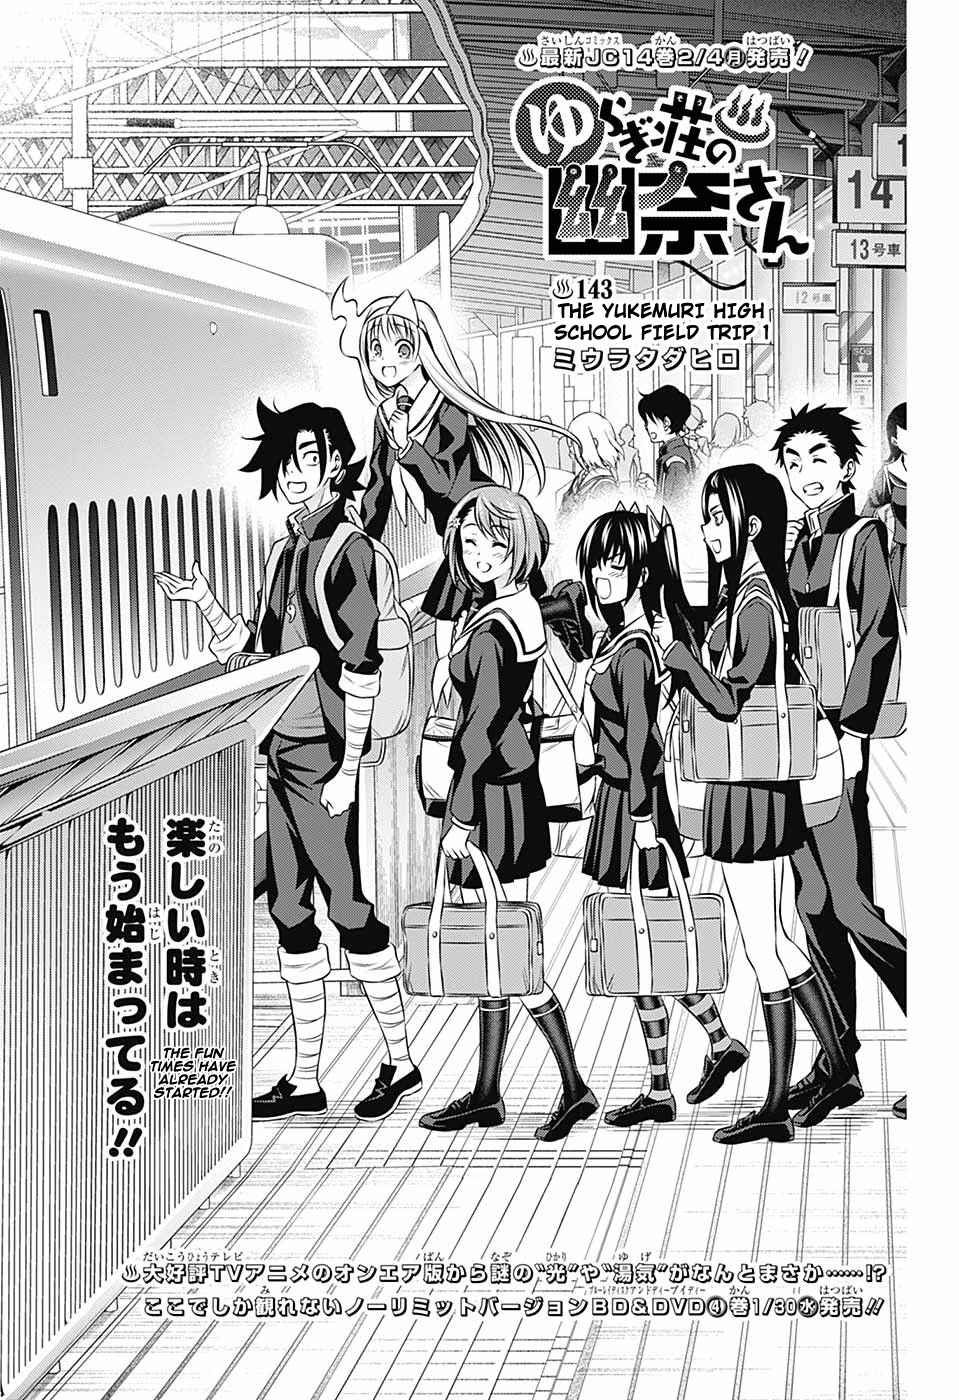 Yuragi sou no Yuuna san Vol. 17 Ch. 143 The Yukemuri High School Field Trip 1